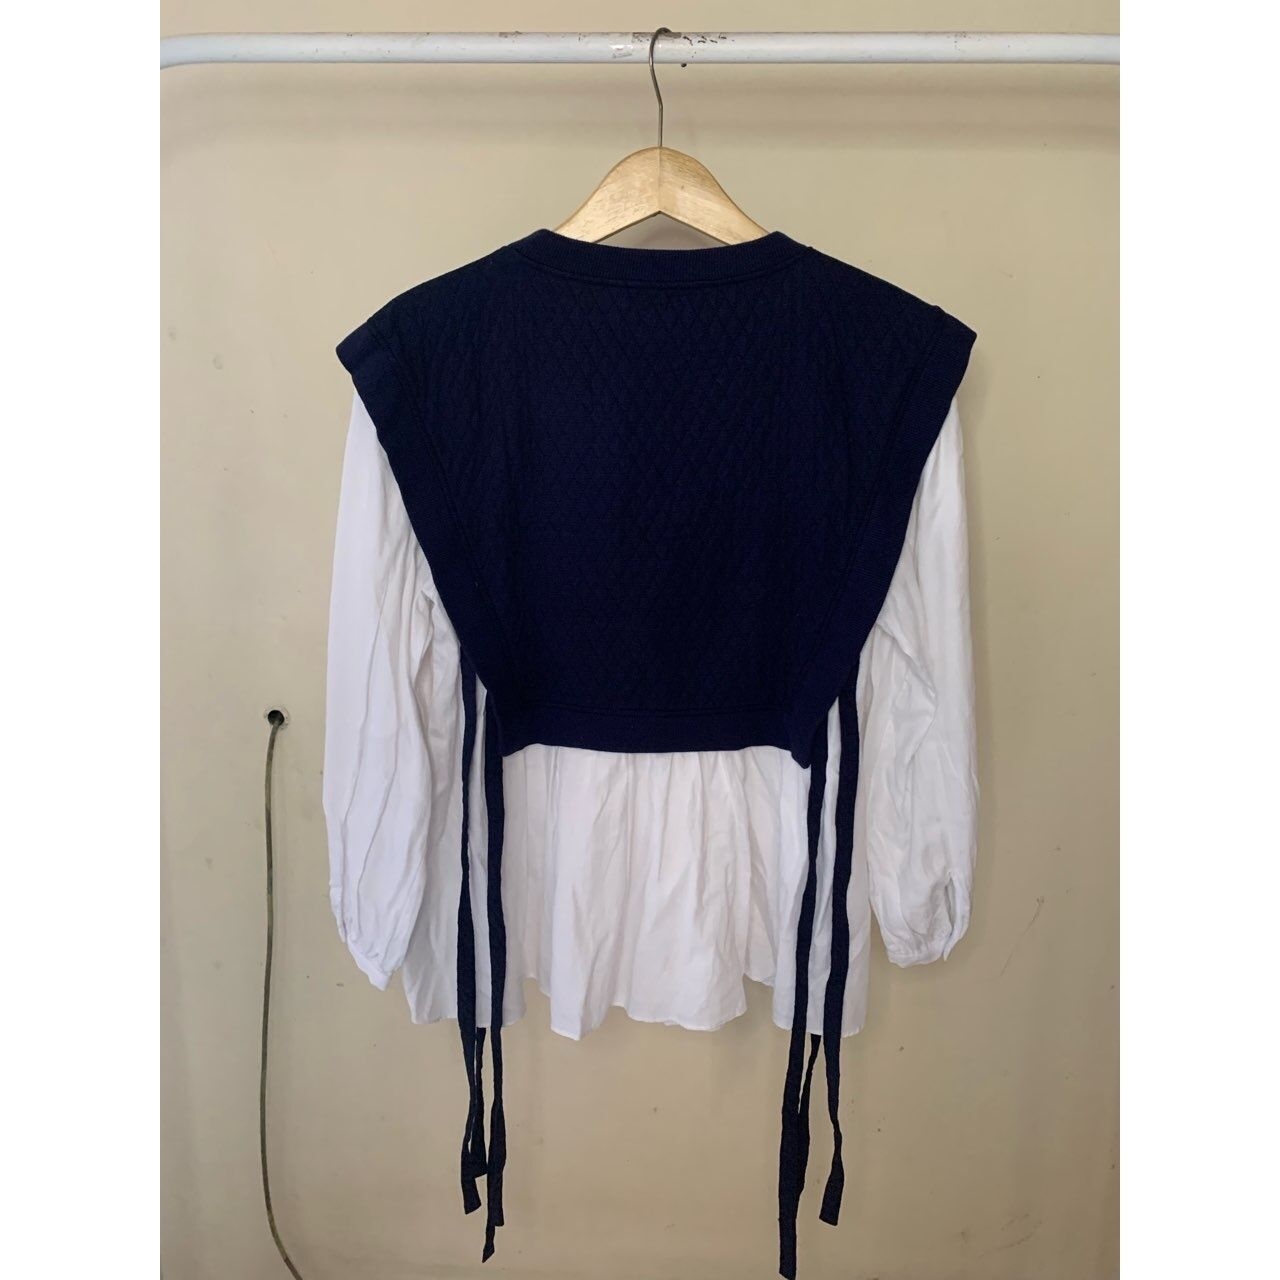 Zara Navy & White Blouse with Vest